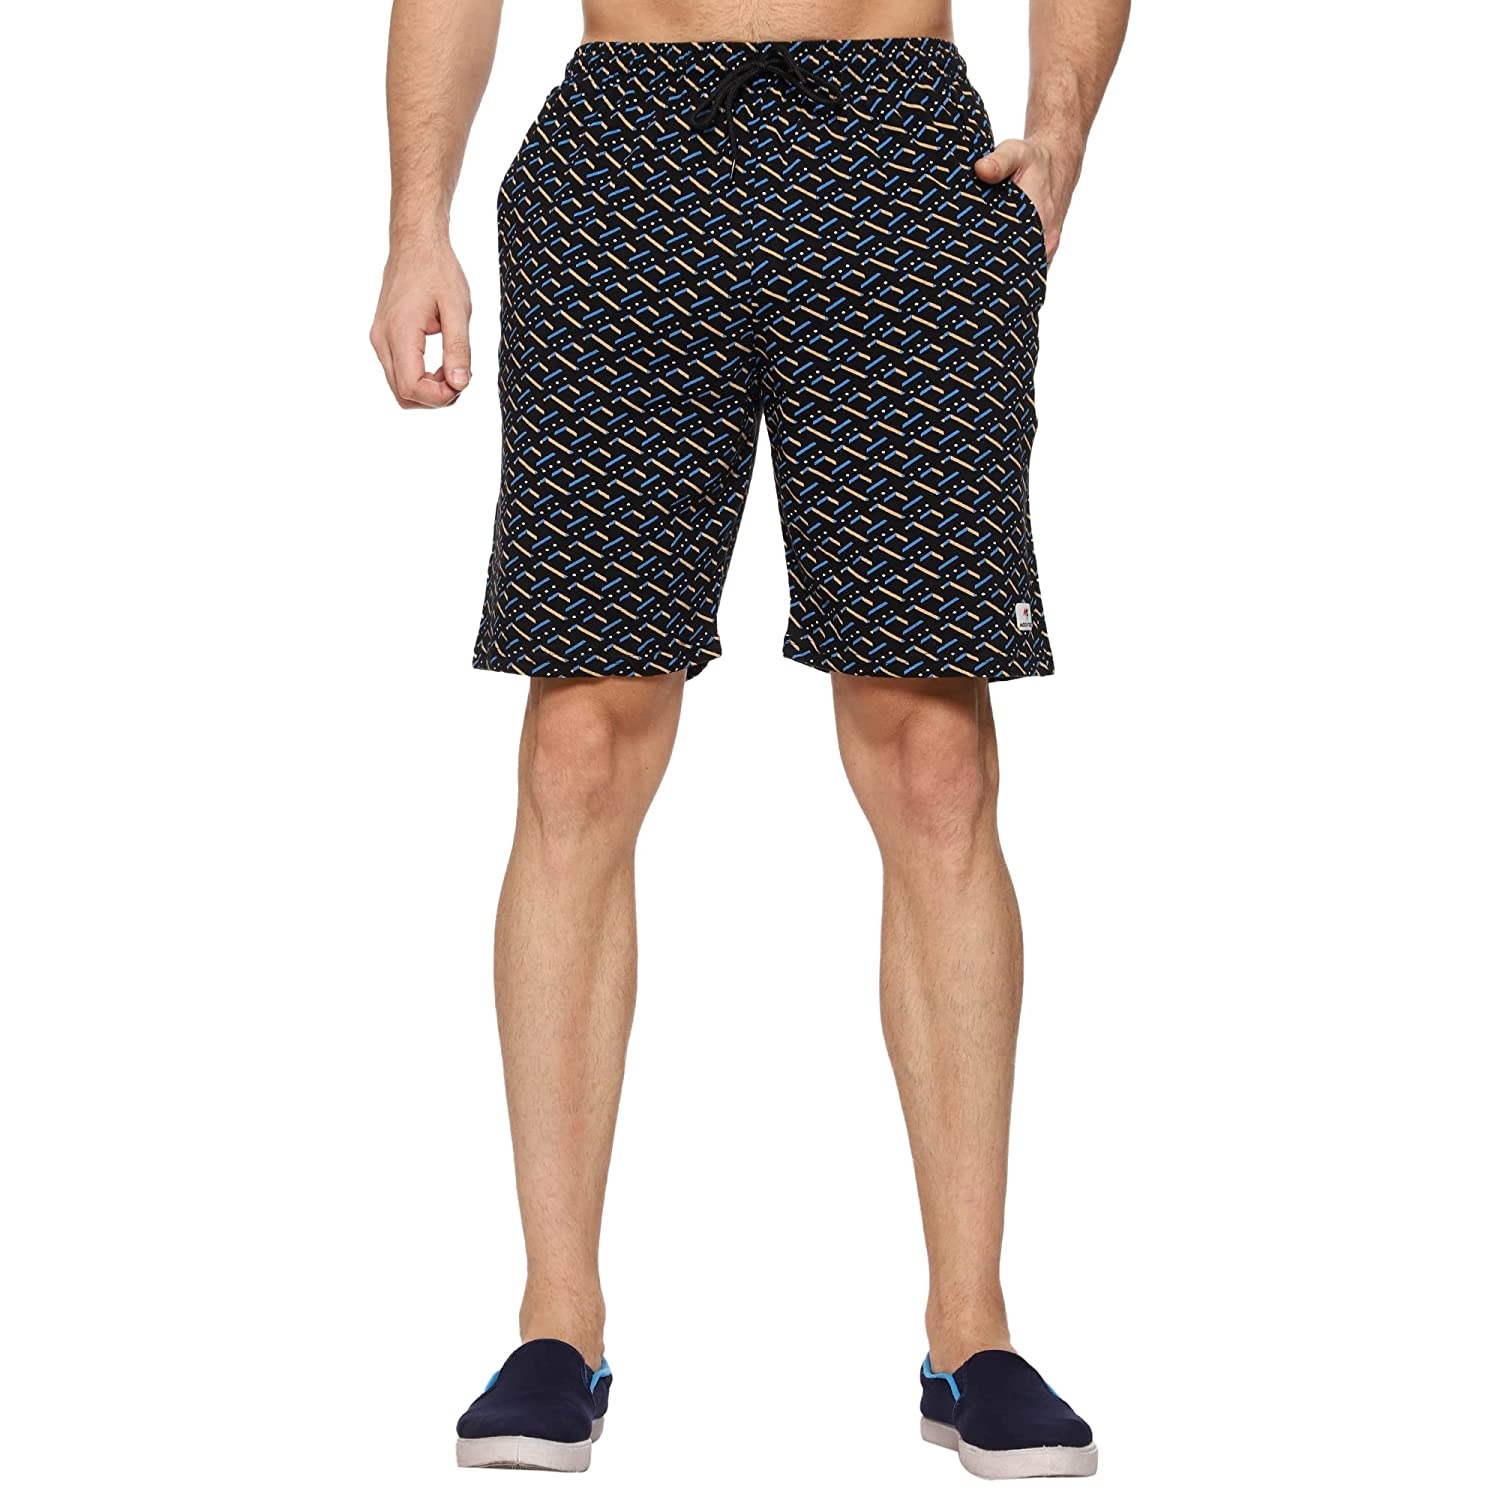 Moovfree Mens Cotton Bermuda Printed Casual Shorts Regular Fit Lounge Shorts with Zip Pockets, Sea Blue